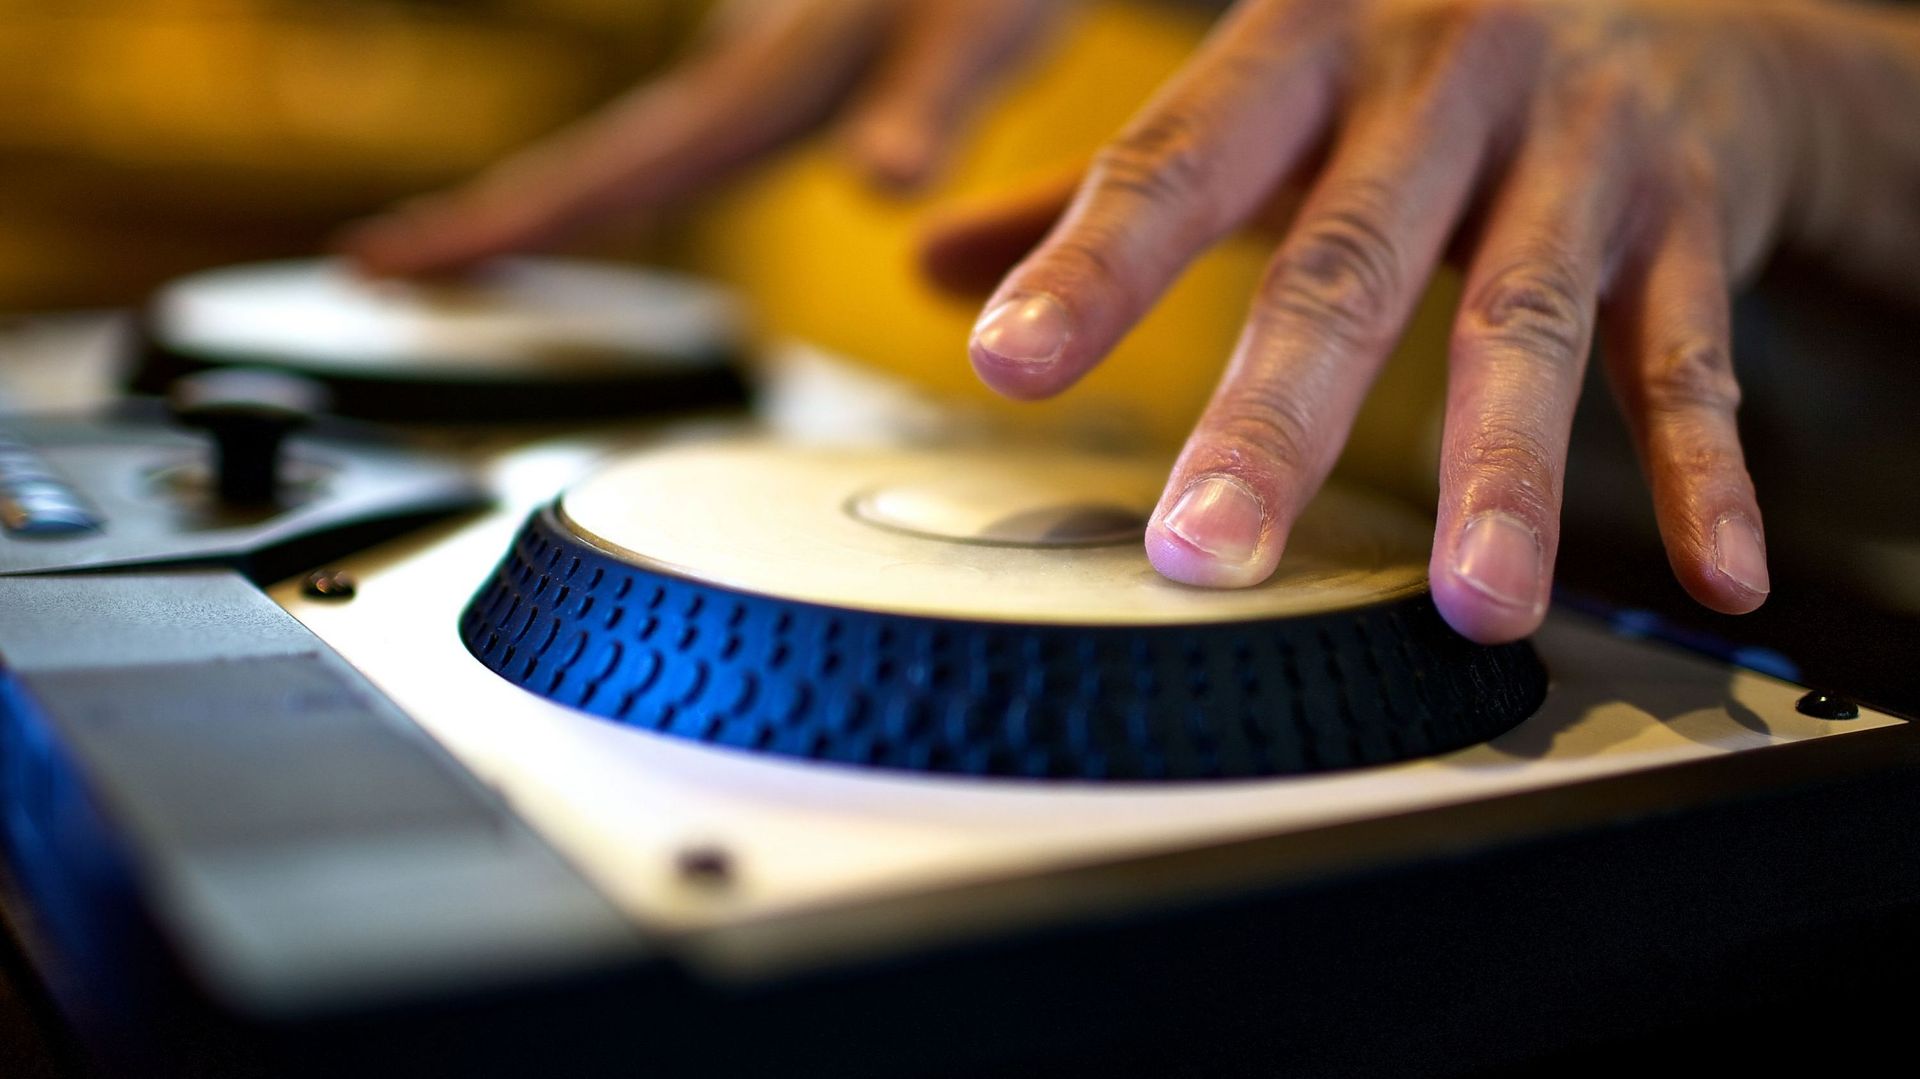 DJ mixing up music using digital turntables.